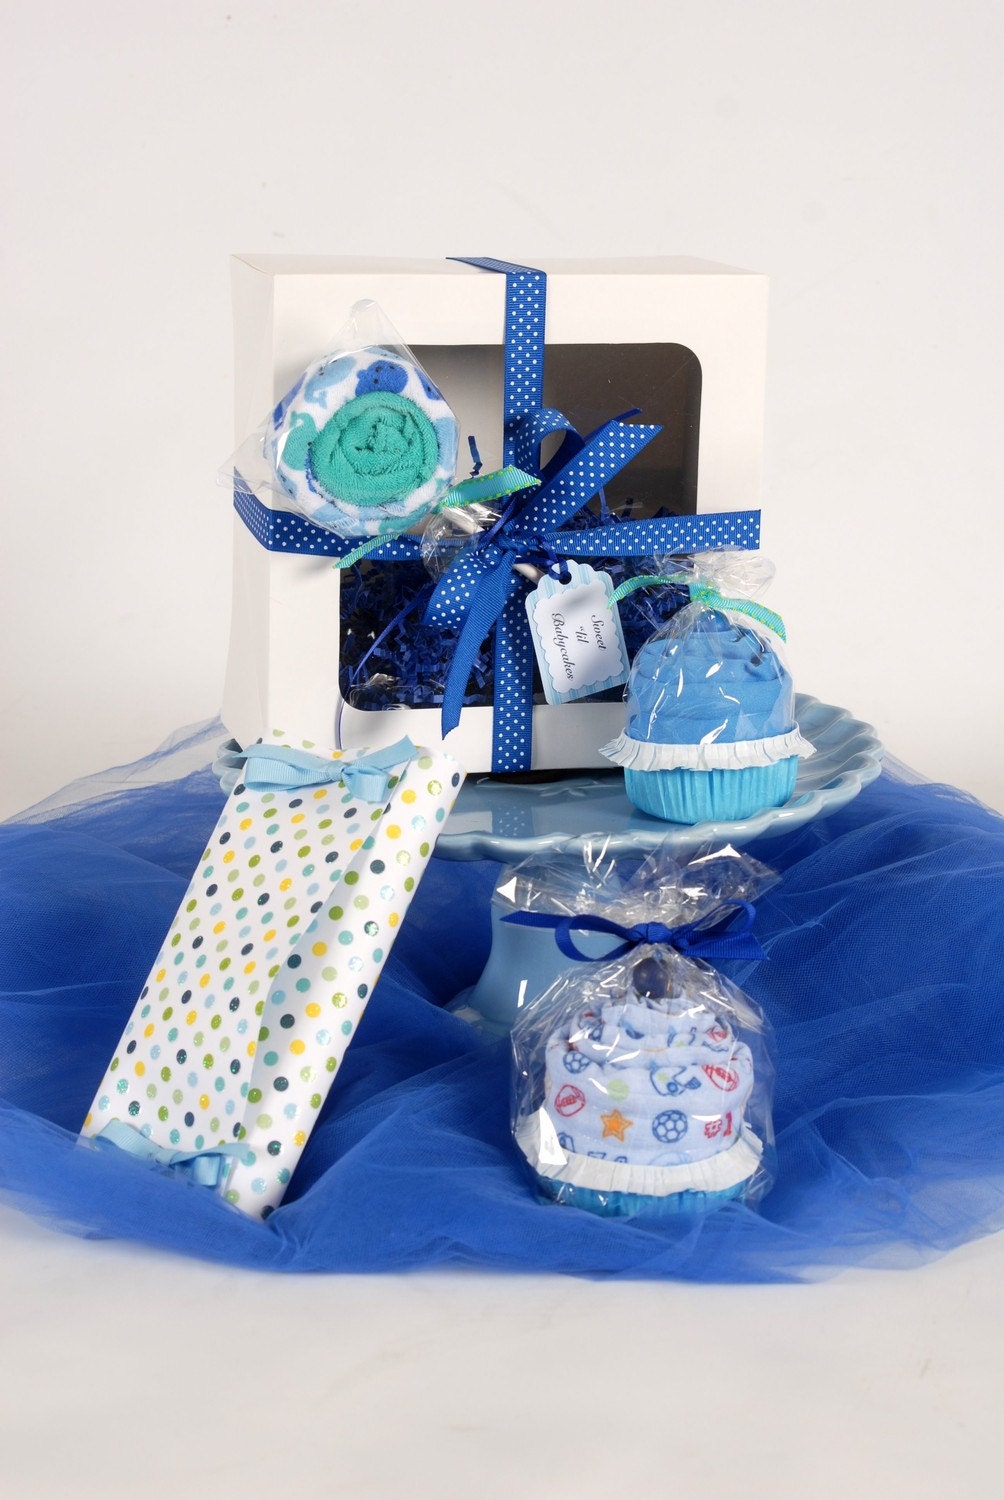 Baby Shower Gift - Sampler Box Cupcake Onesie Gift Set The Riley   baby shower   ایده برای تزیین سیسمونی  نوزاد و فرشته كوچولو جشن سیسمونی یا